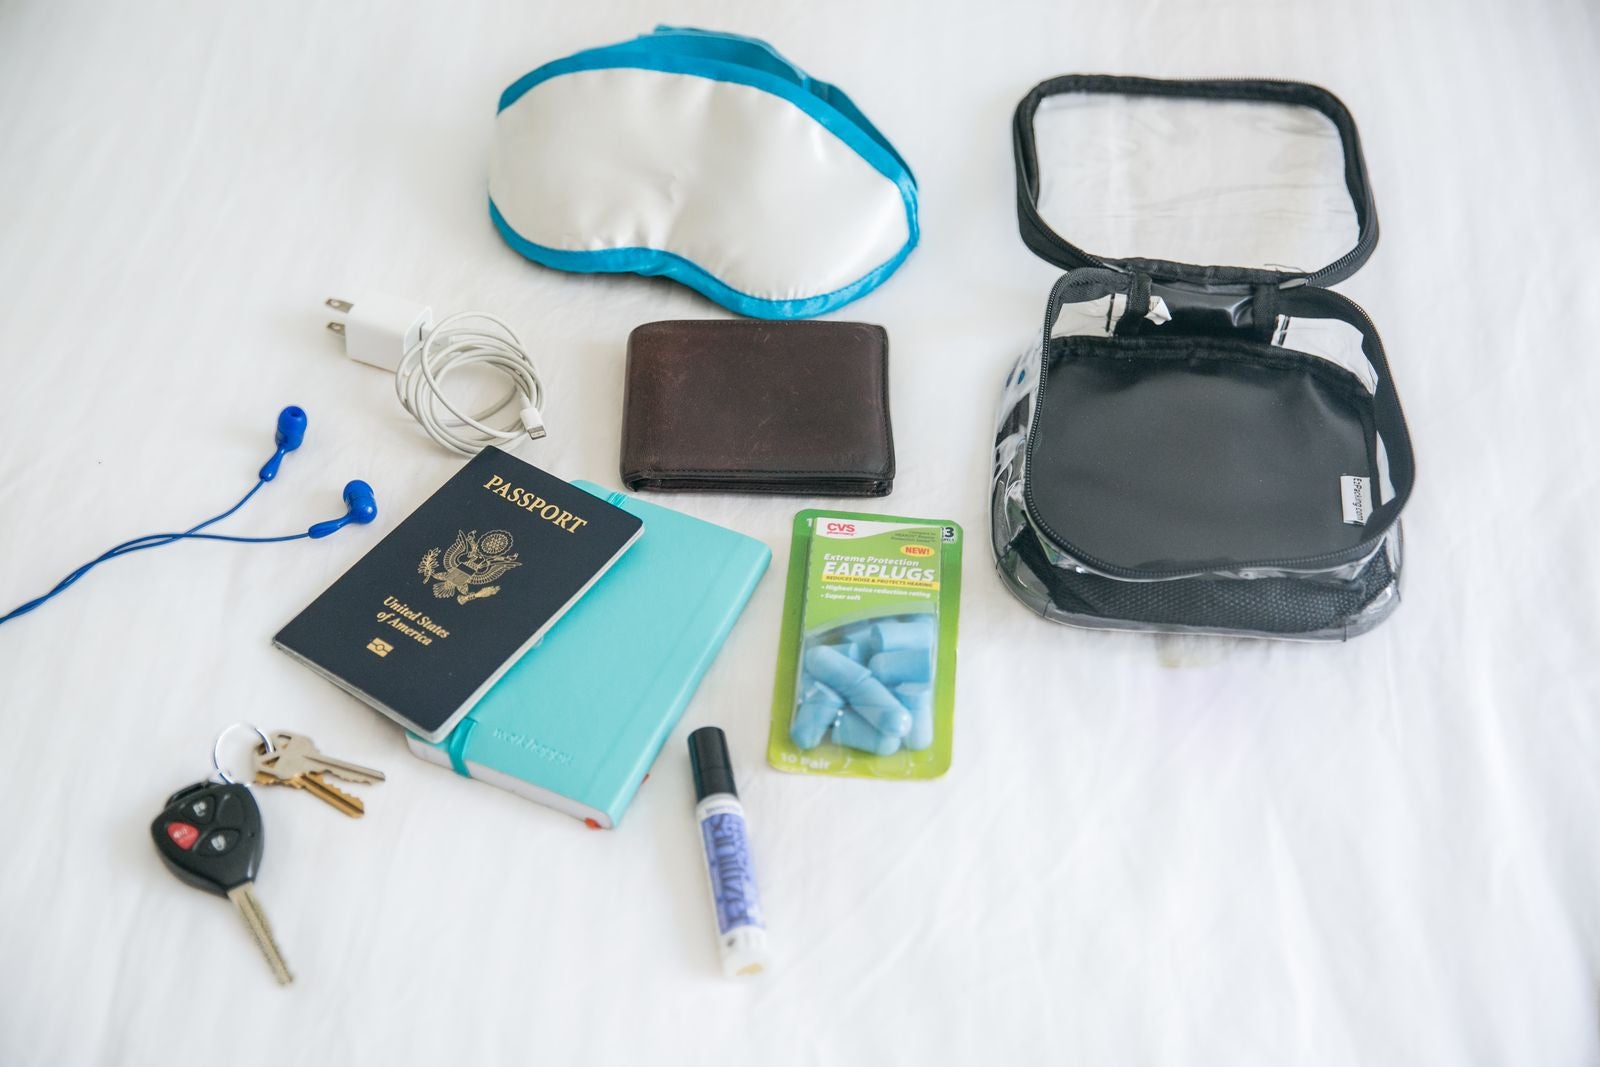 Passport and other travel essentials